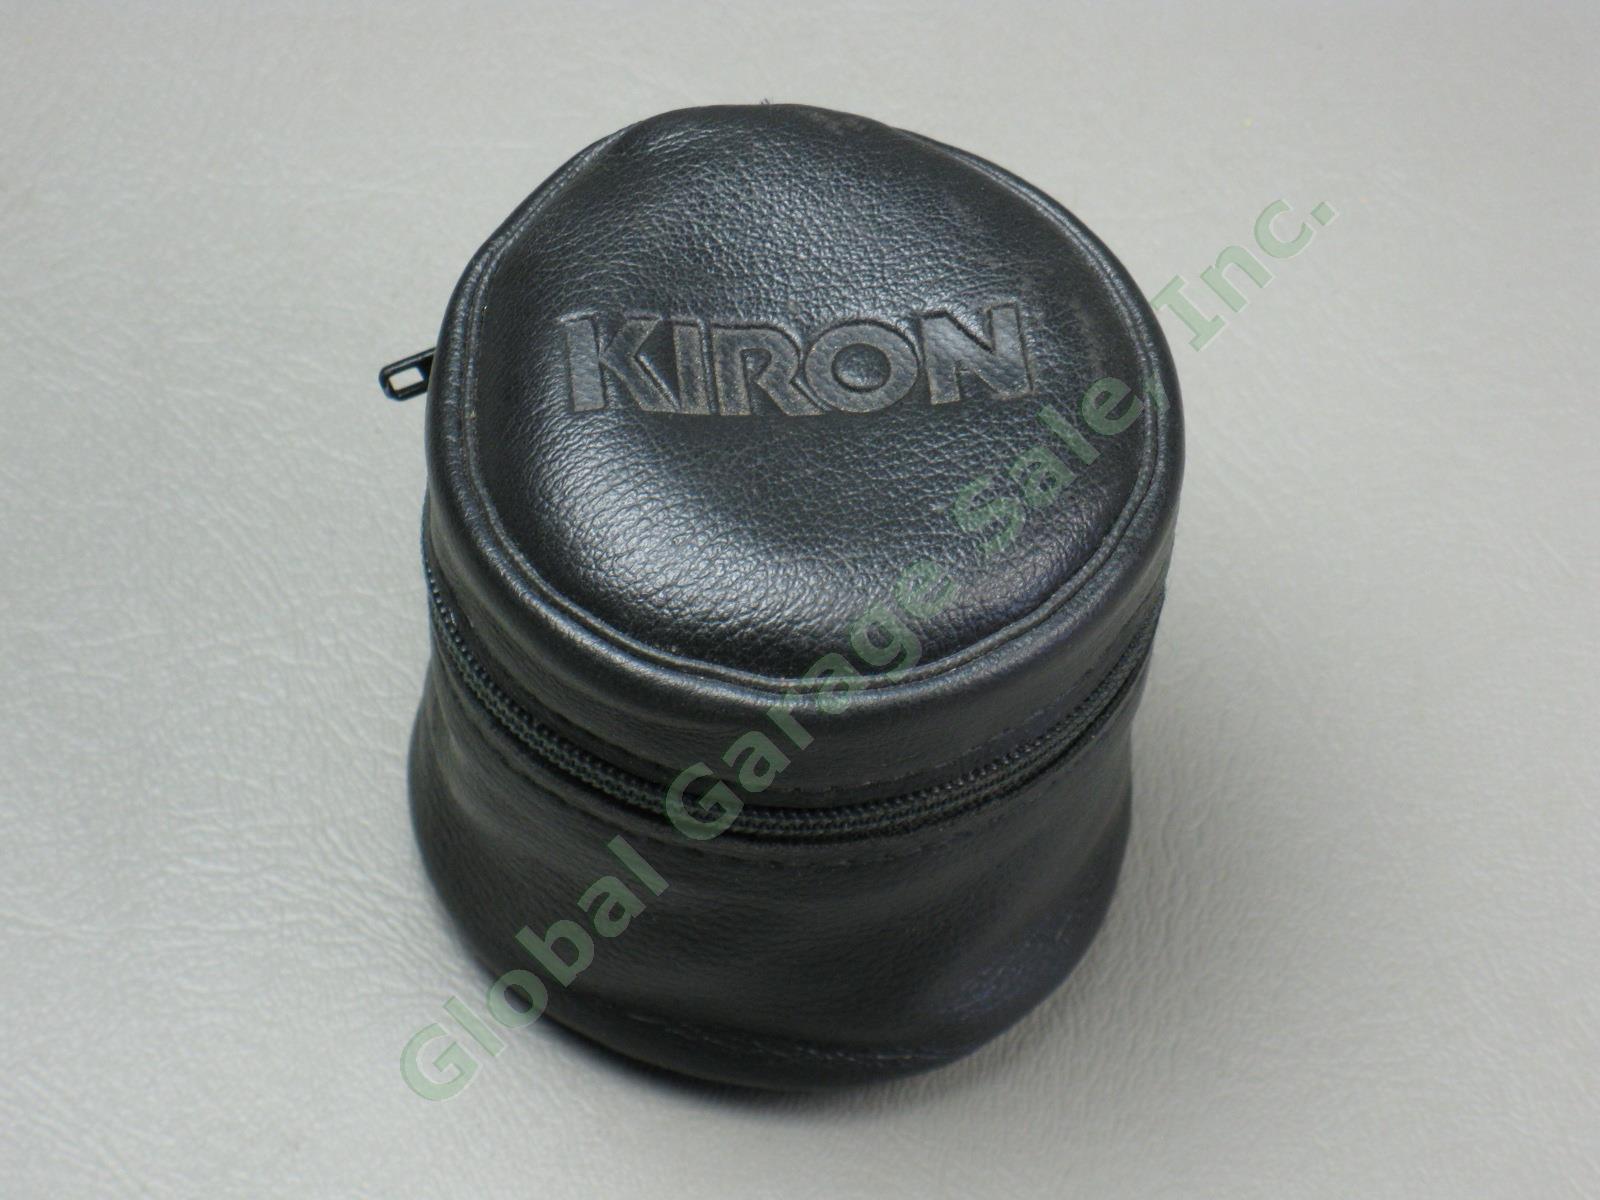 Kiron 24mm f/2 Wide Angle Camera Lens Kino Precision MC Pentax K Mount? NO RES! 7